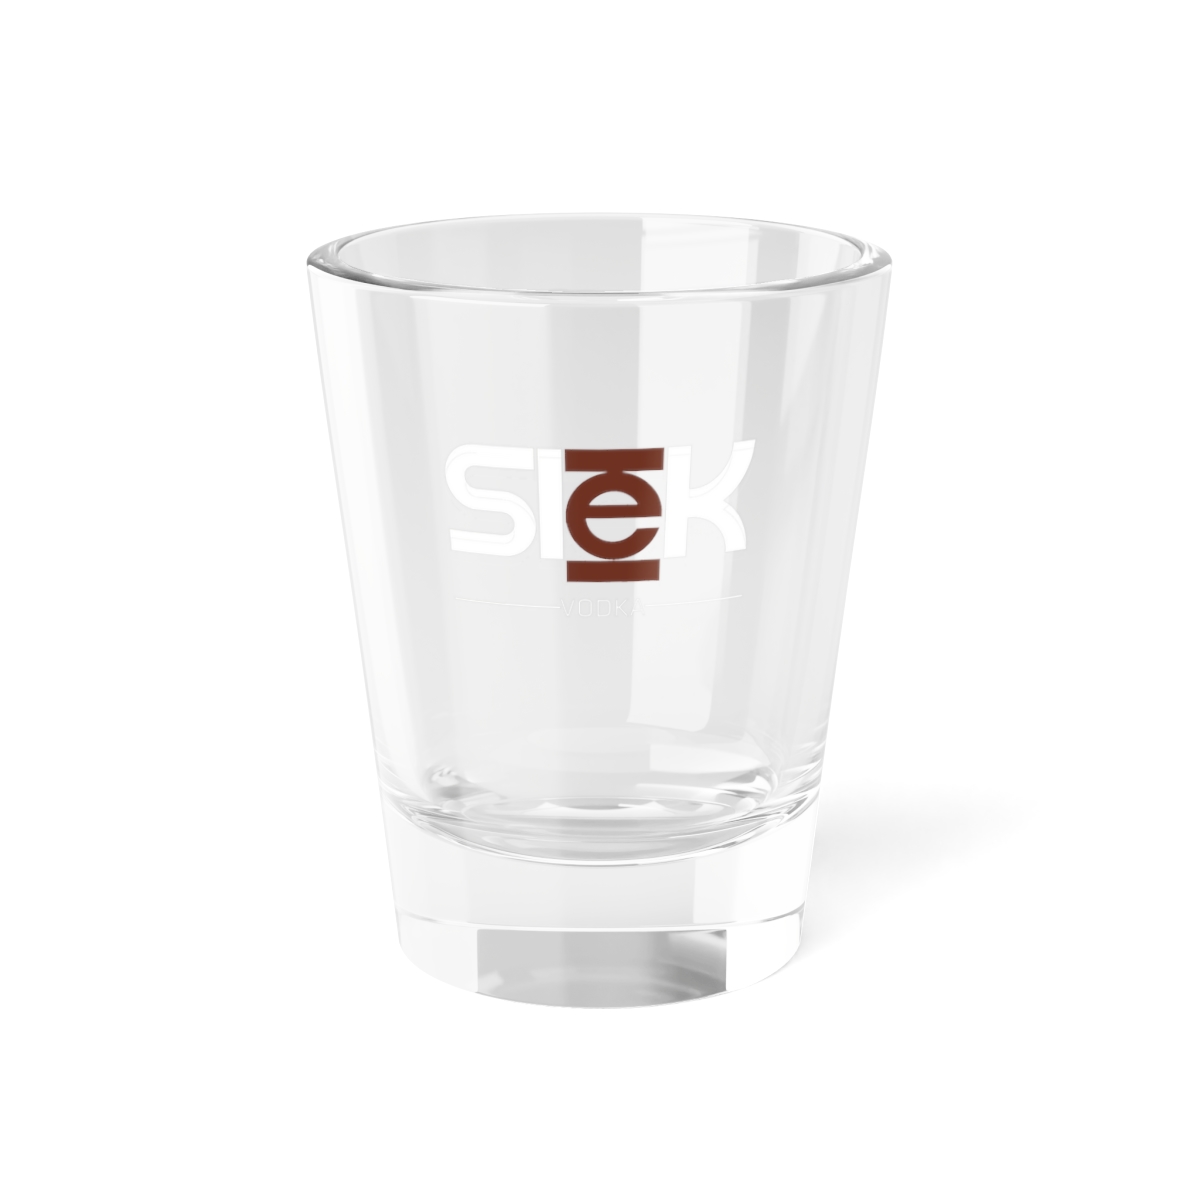  Slēk Vodka Shot Glass, 1.5oz product main image